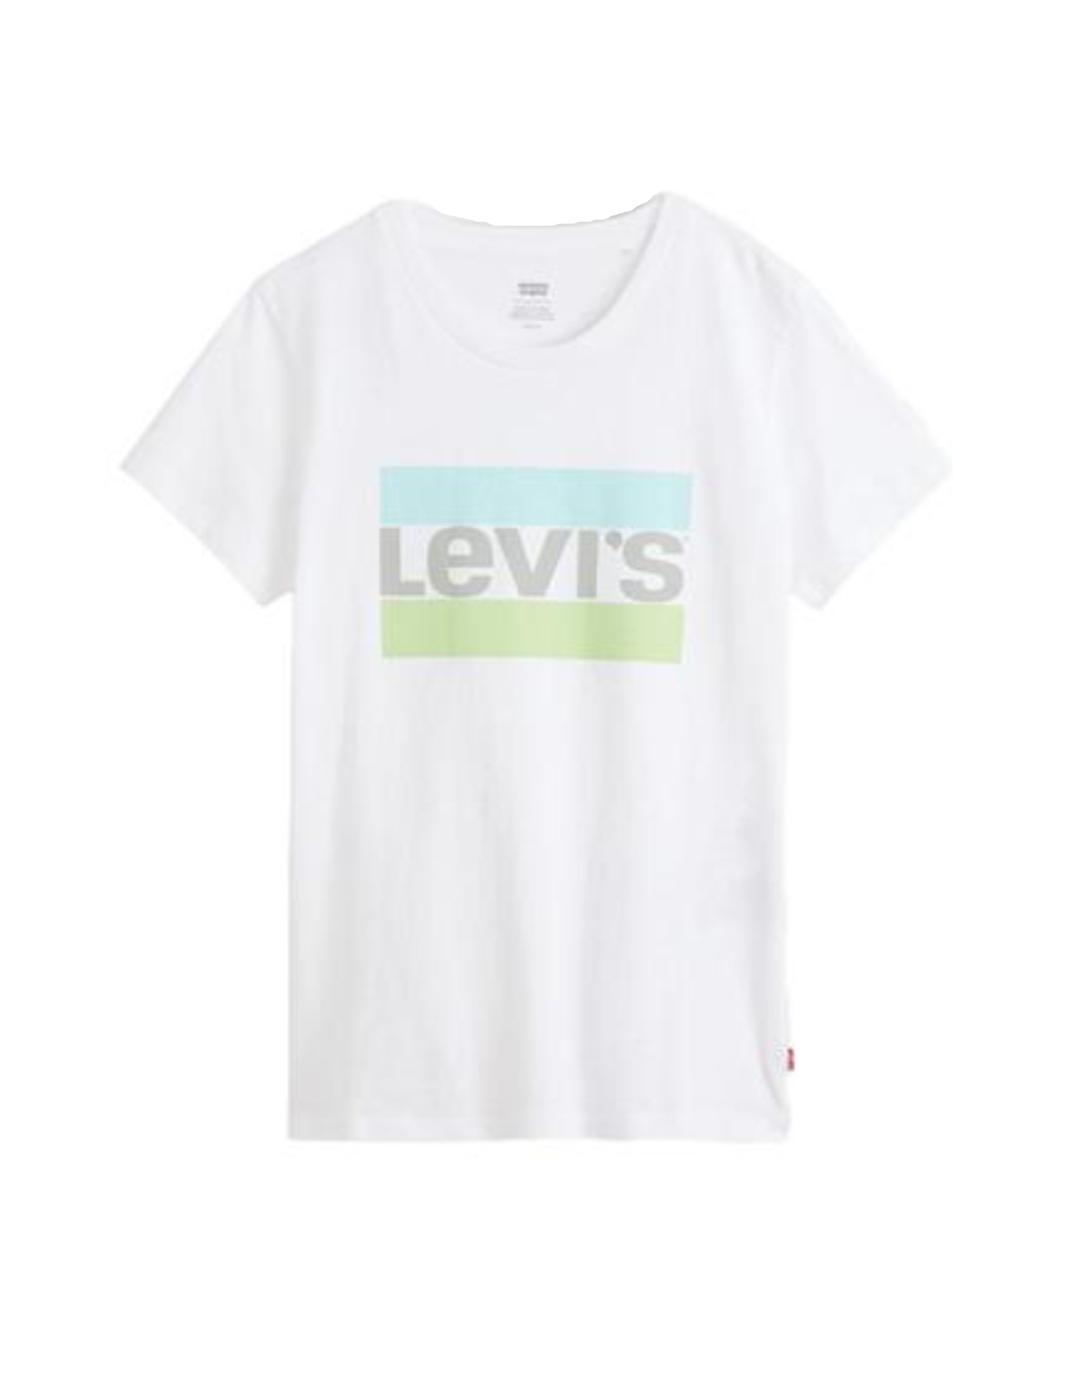 Camiseta Levis Seasonal Sptwr blanca para mujer -z